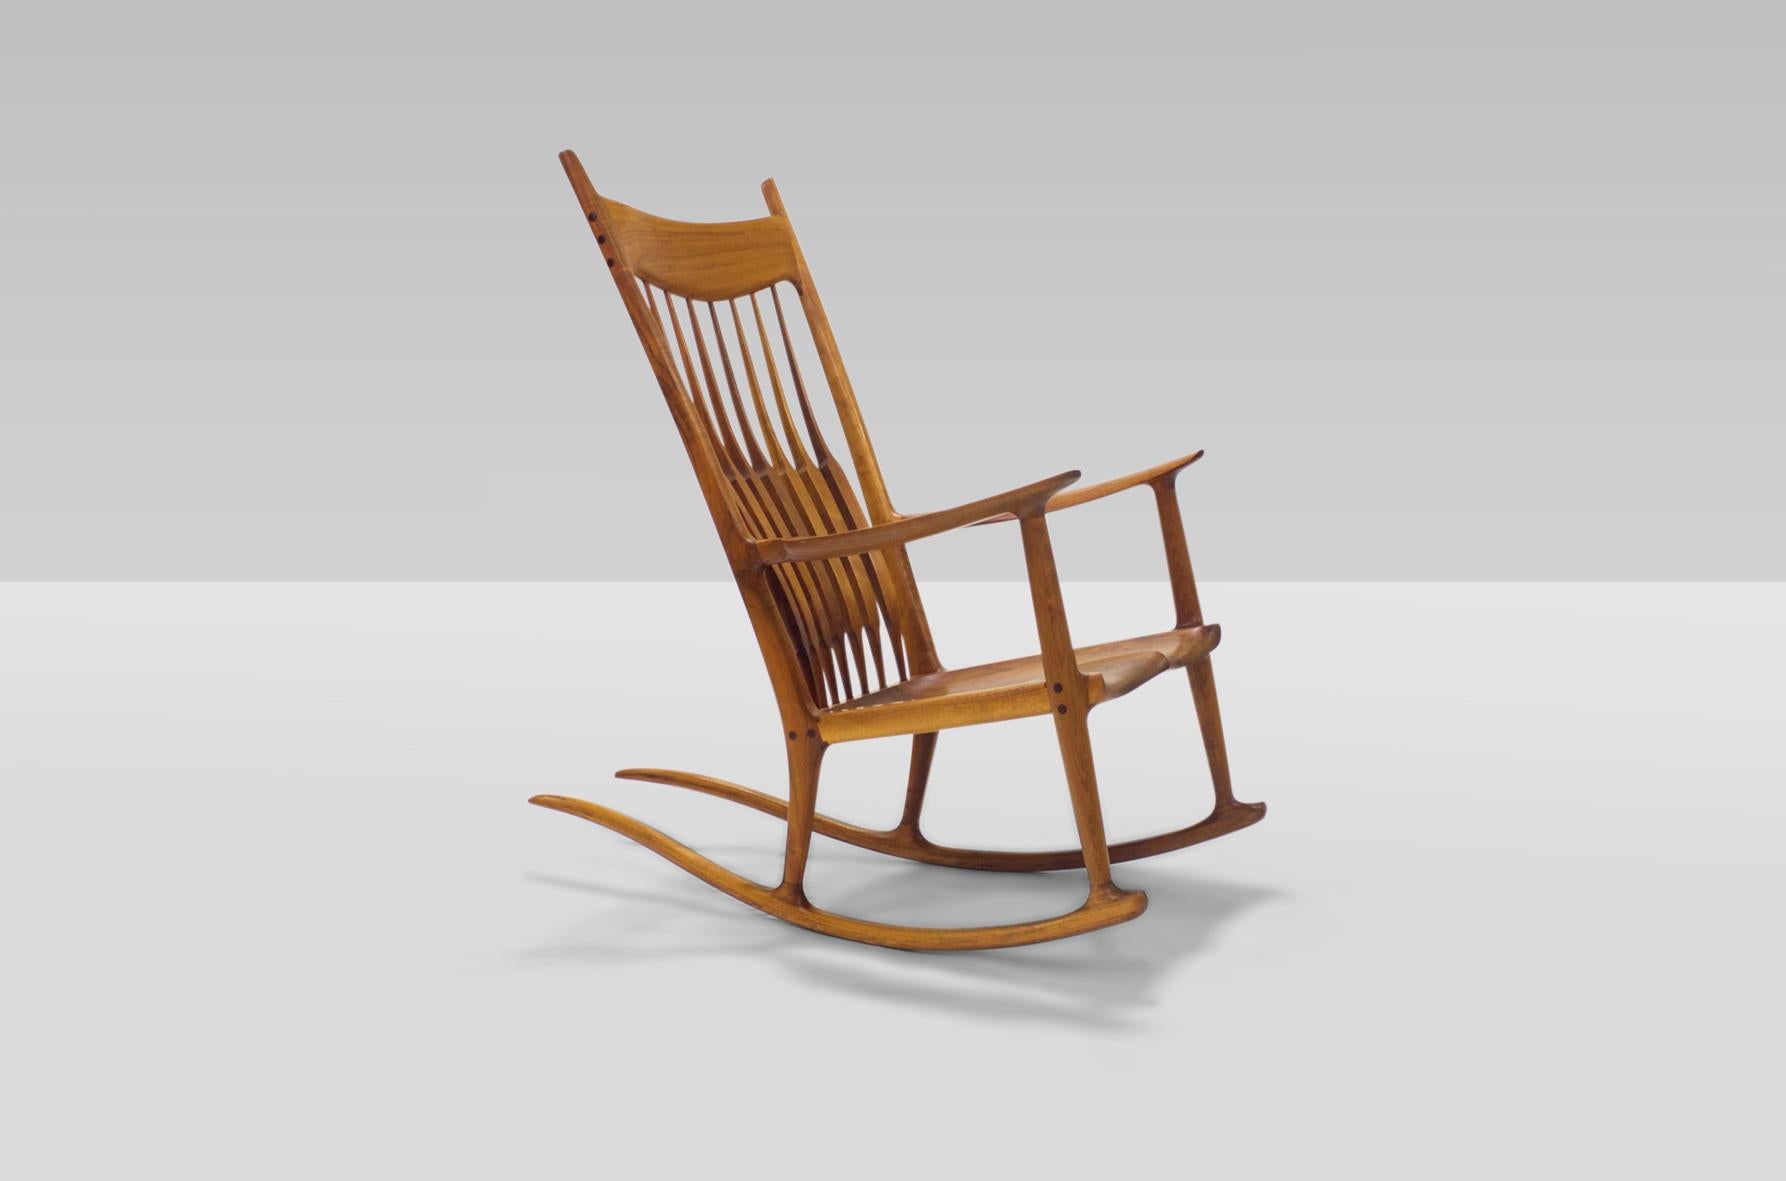 maloof style rocking chair